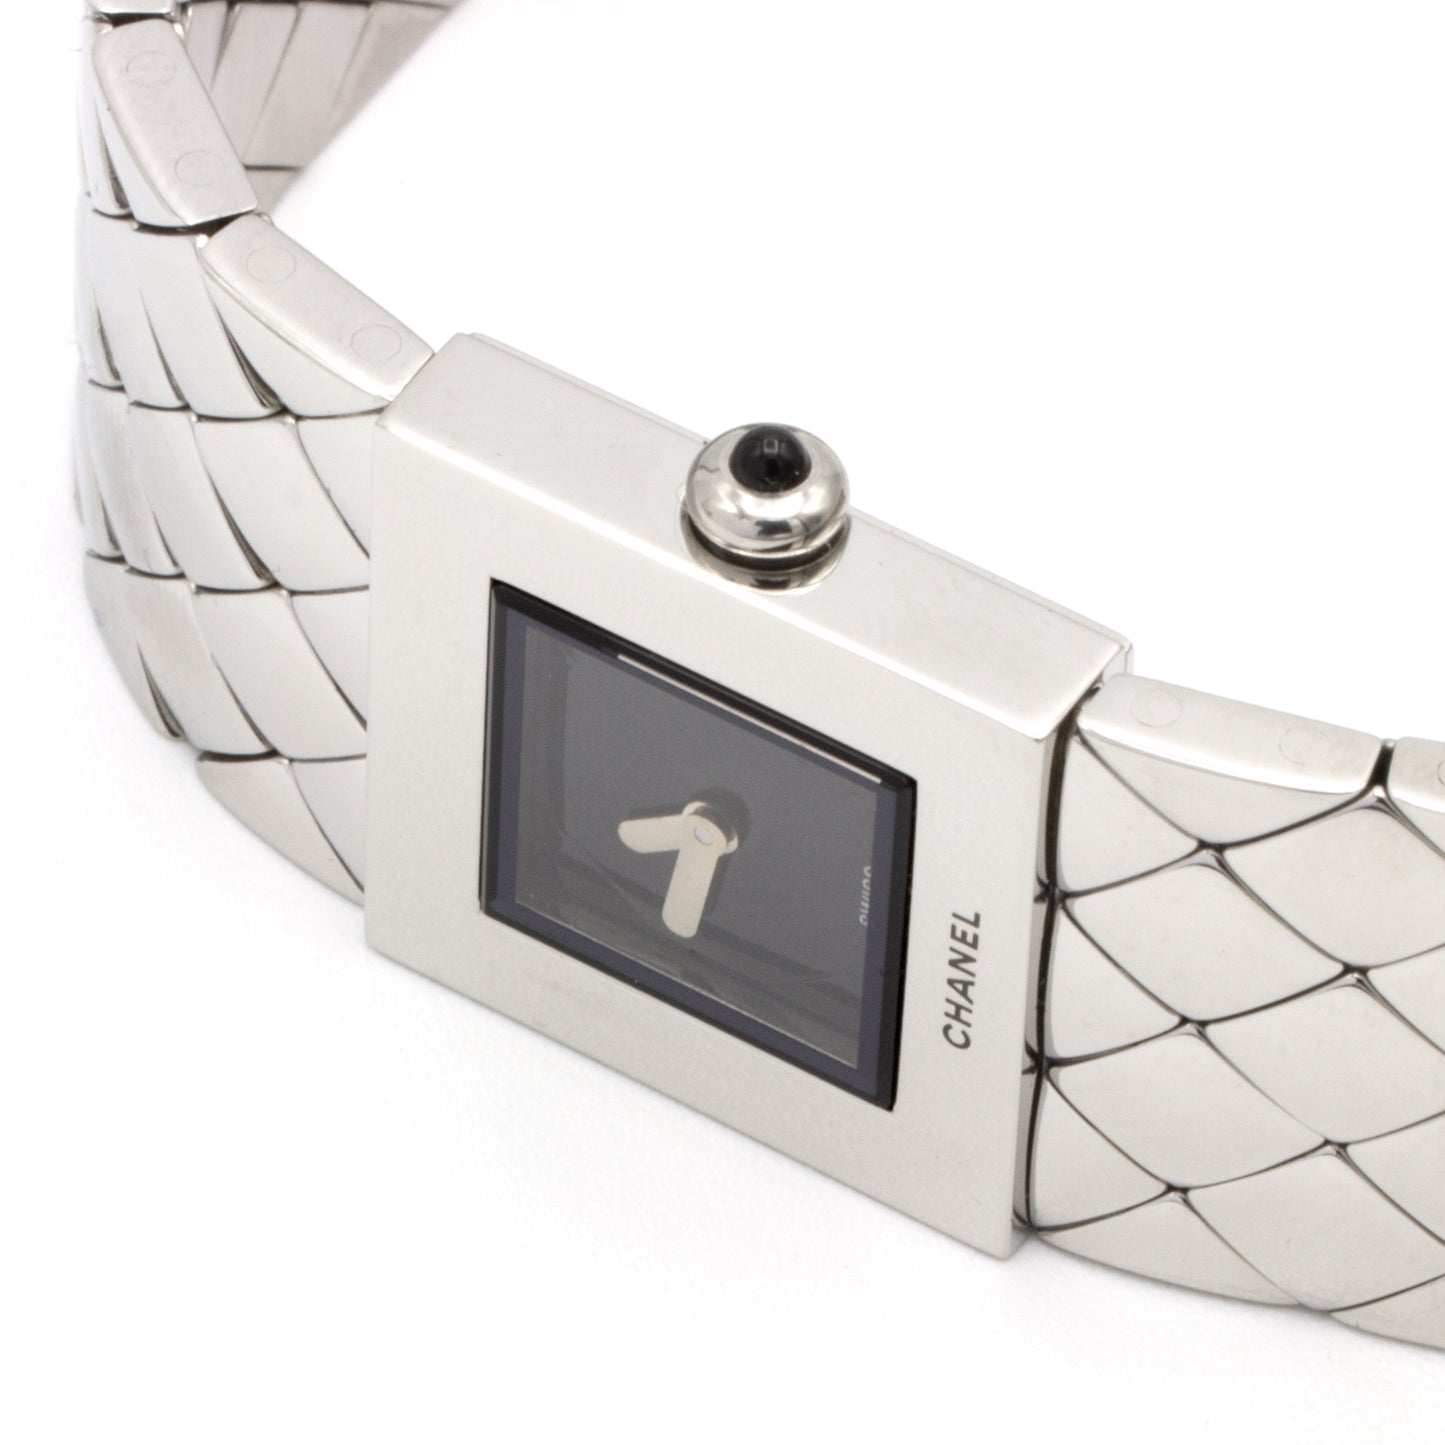 Chanel Matelassée steel watch